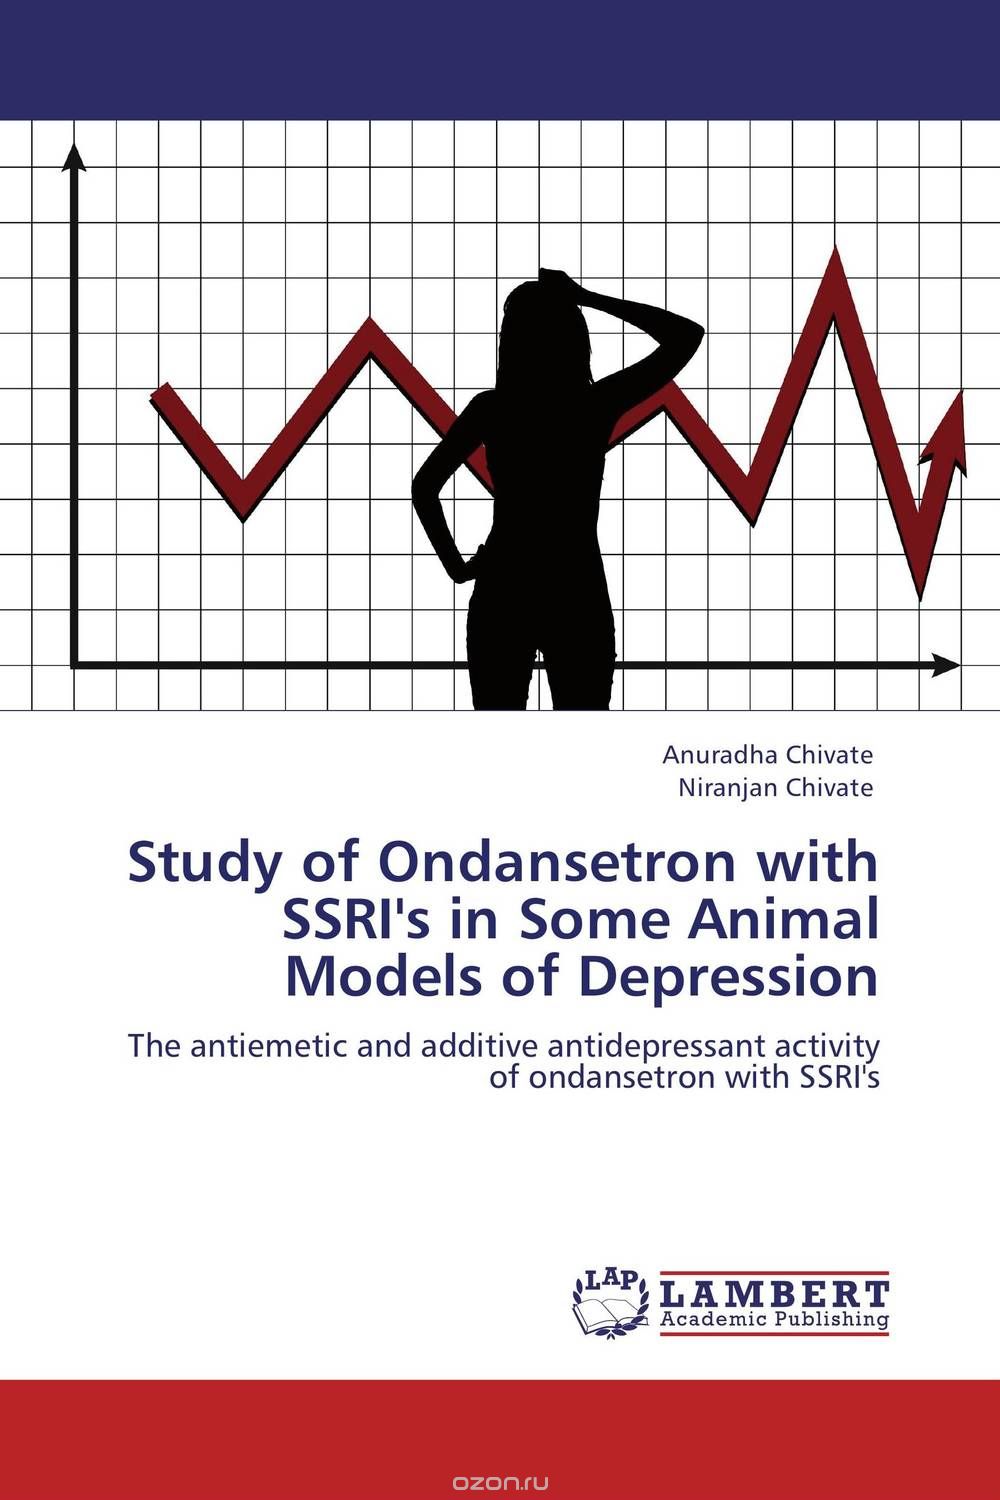 Скачать книгу "Study of Ondansetron with SSRI's in Some Animal Models of Depression"